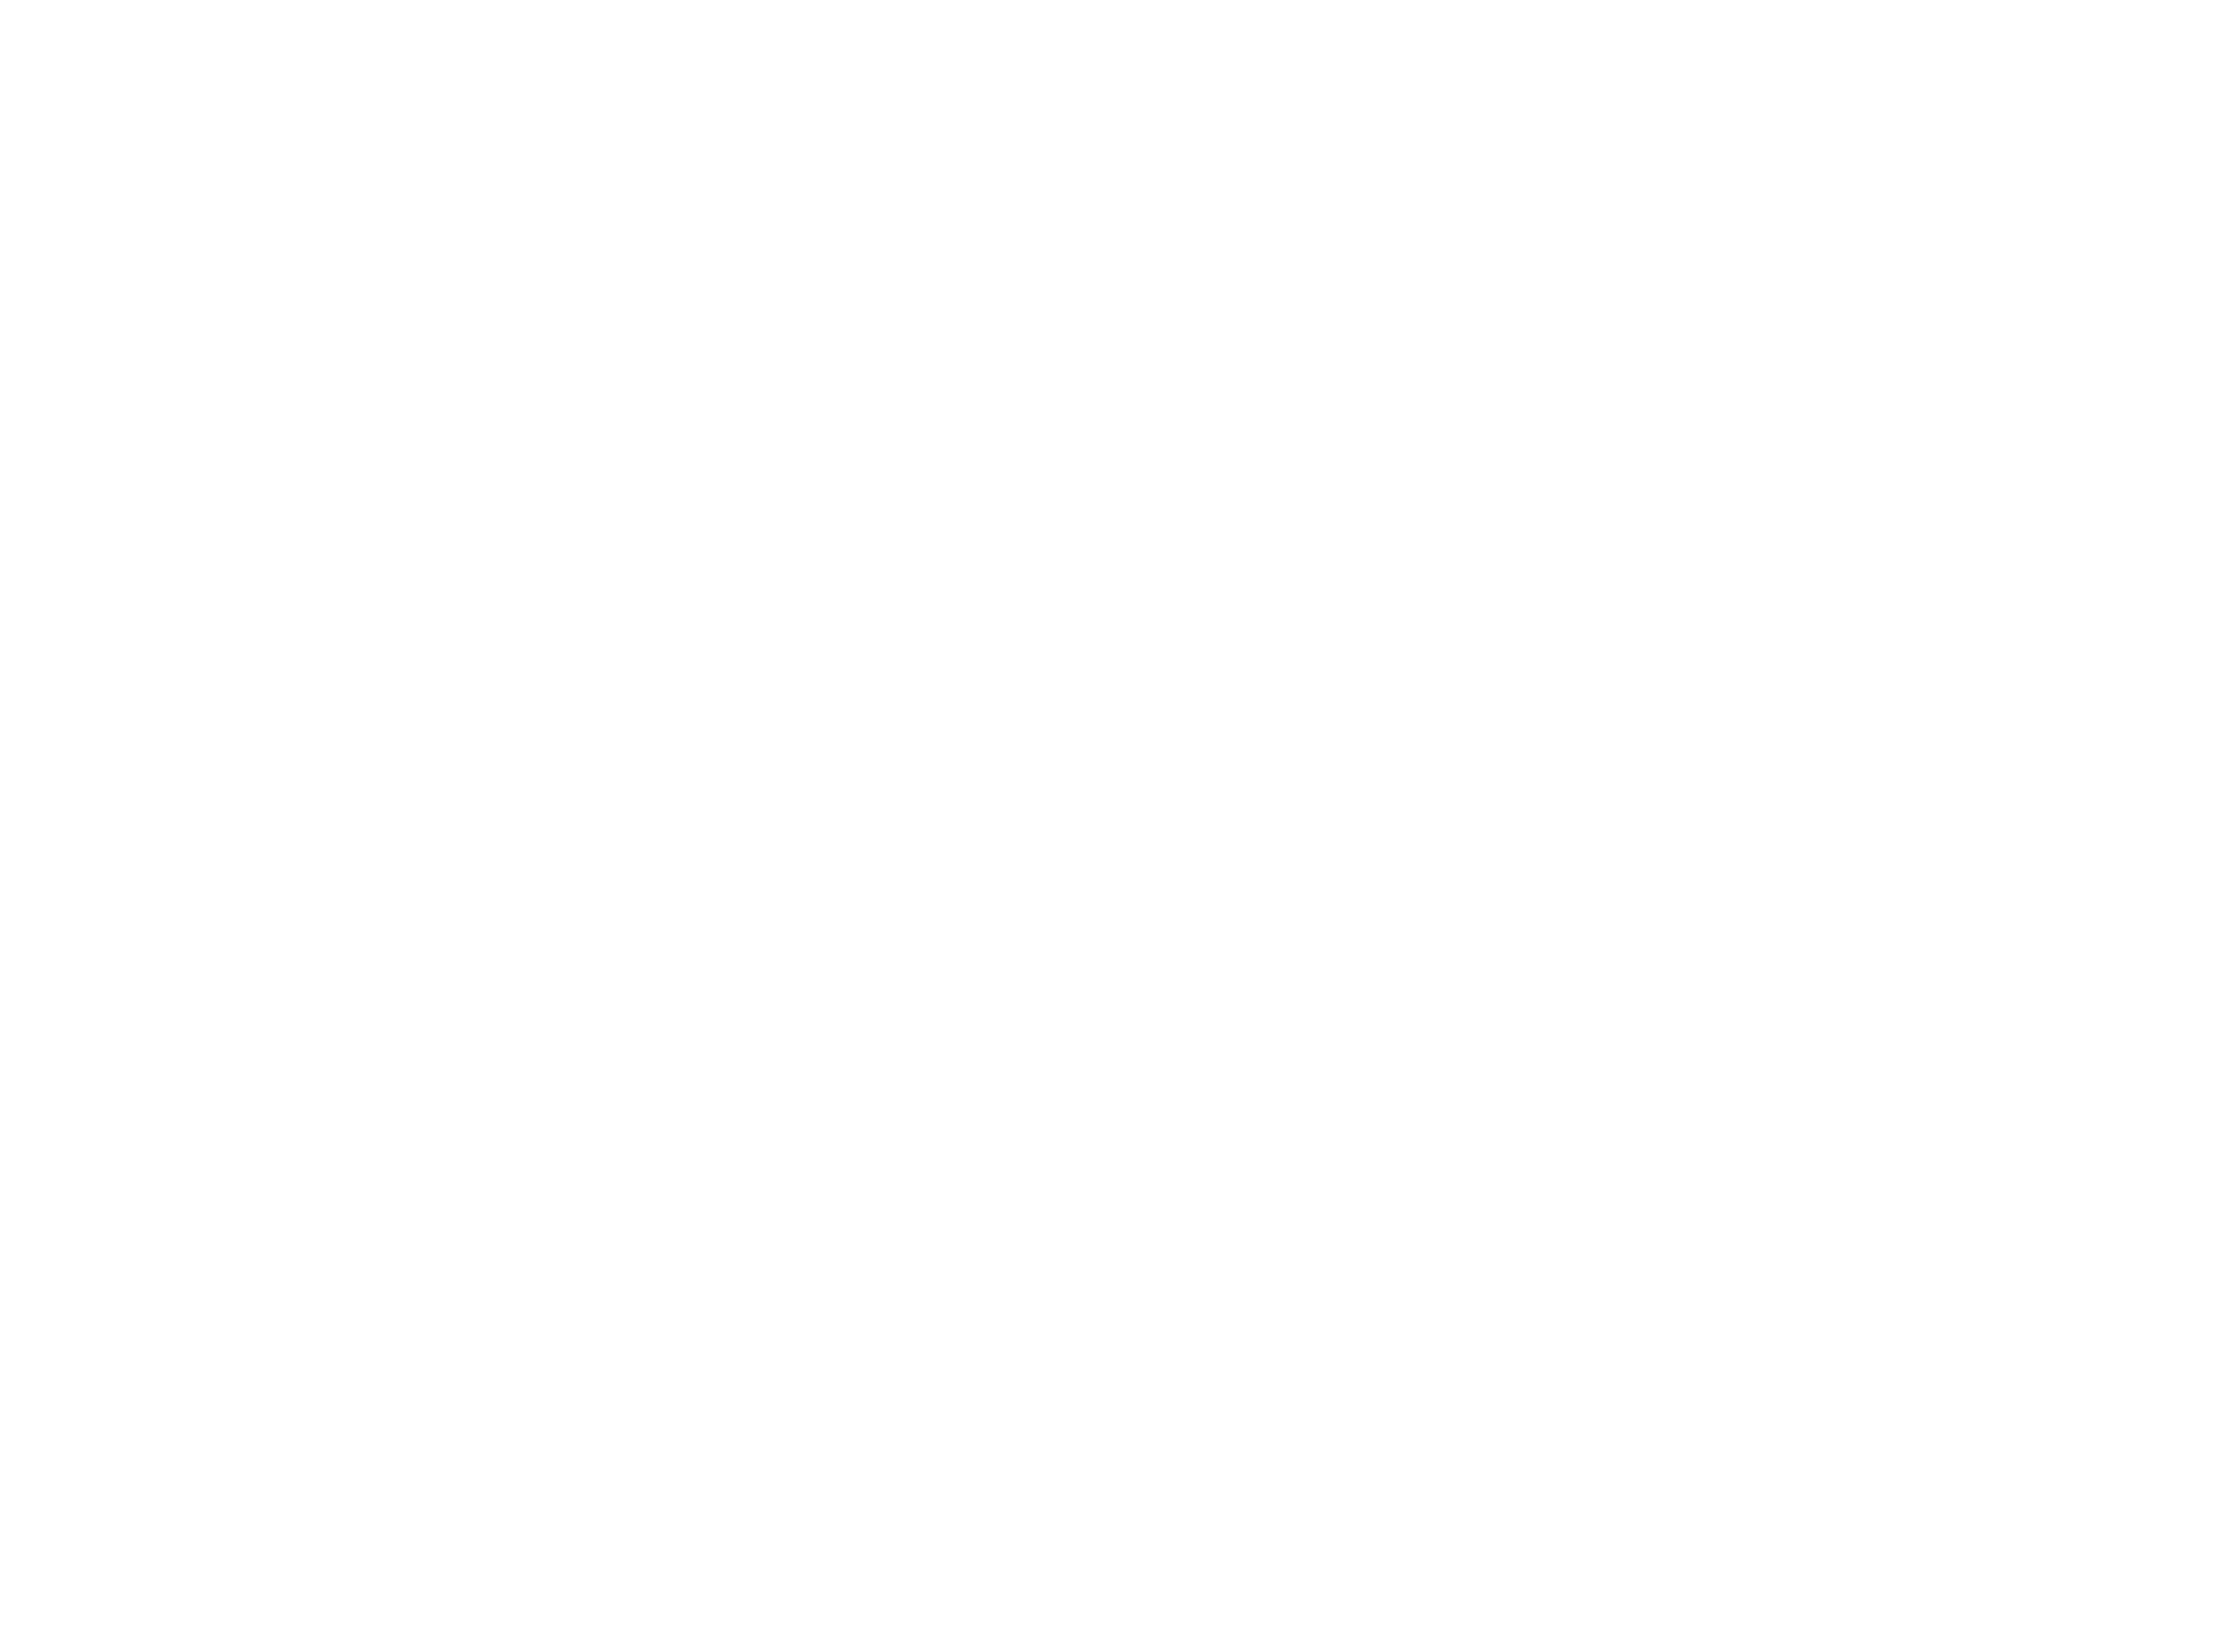 Kommunens logo